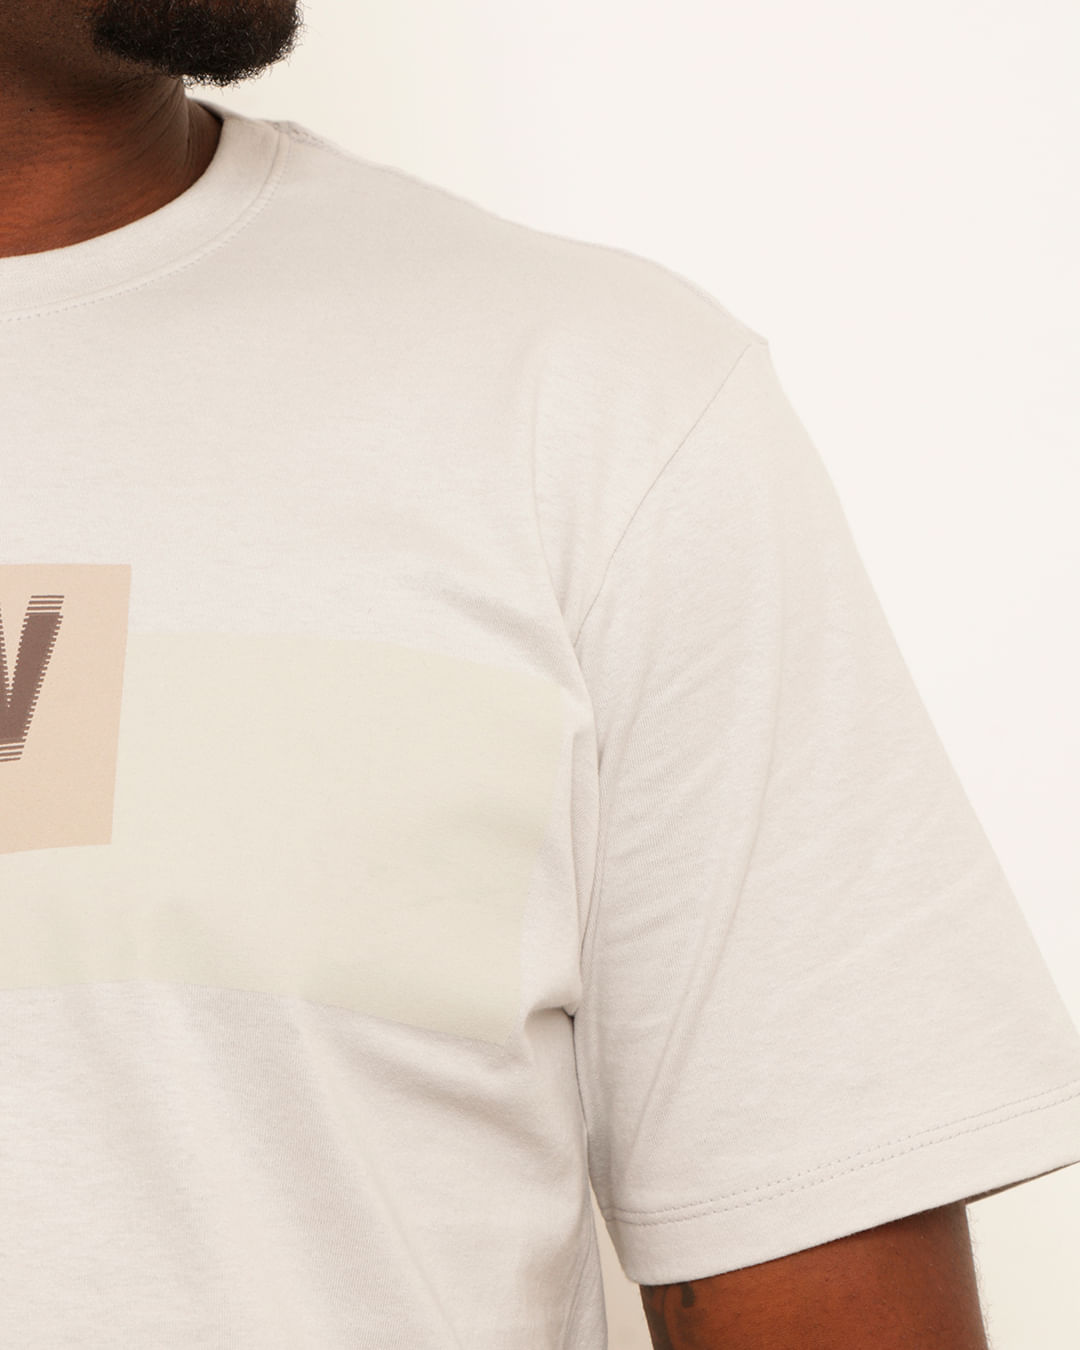 Camiseta-T-Shirt-Est-Slow-Living-5---Cinza-Claro